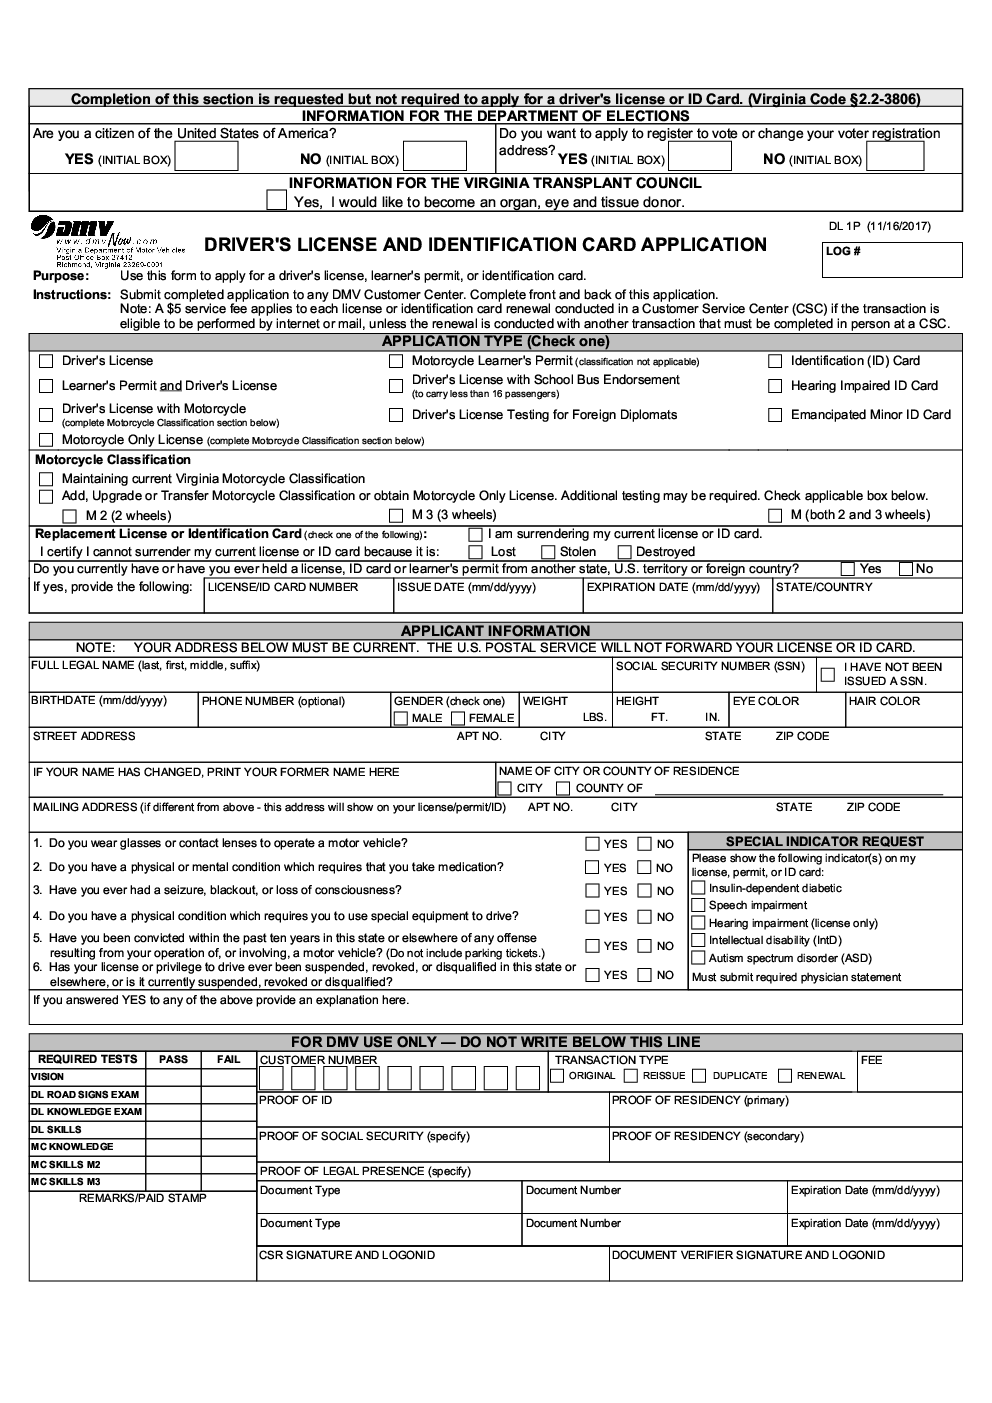 dmv driver's license application form